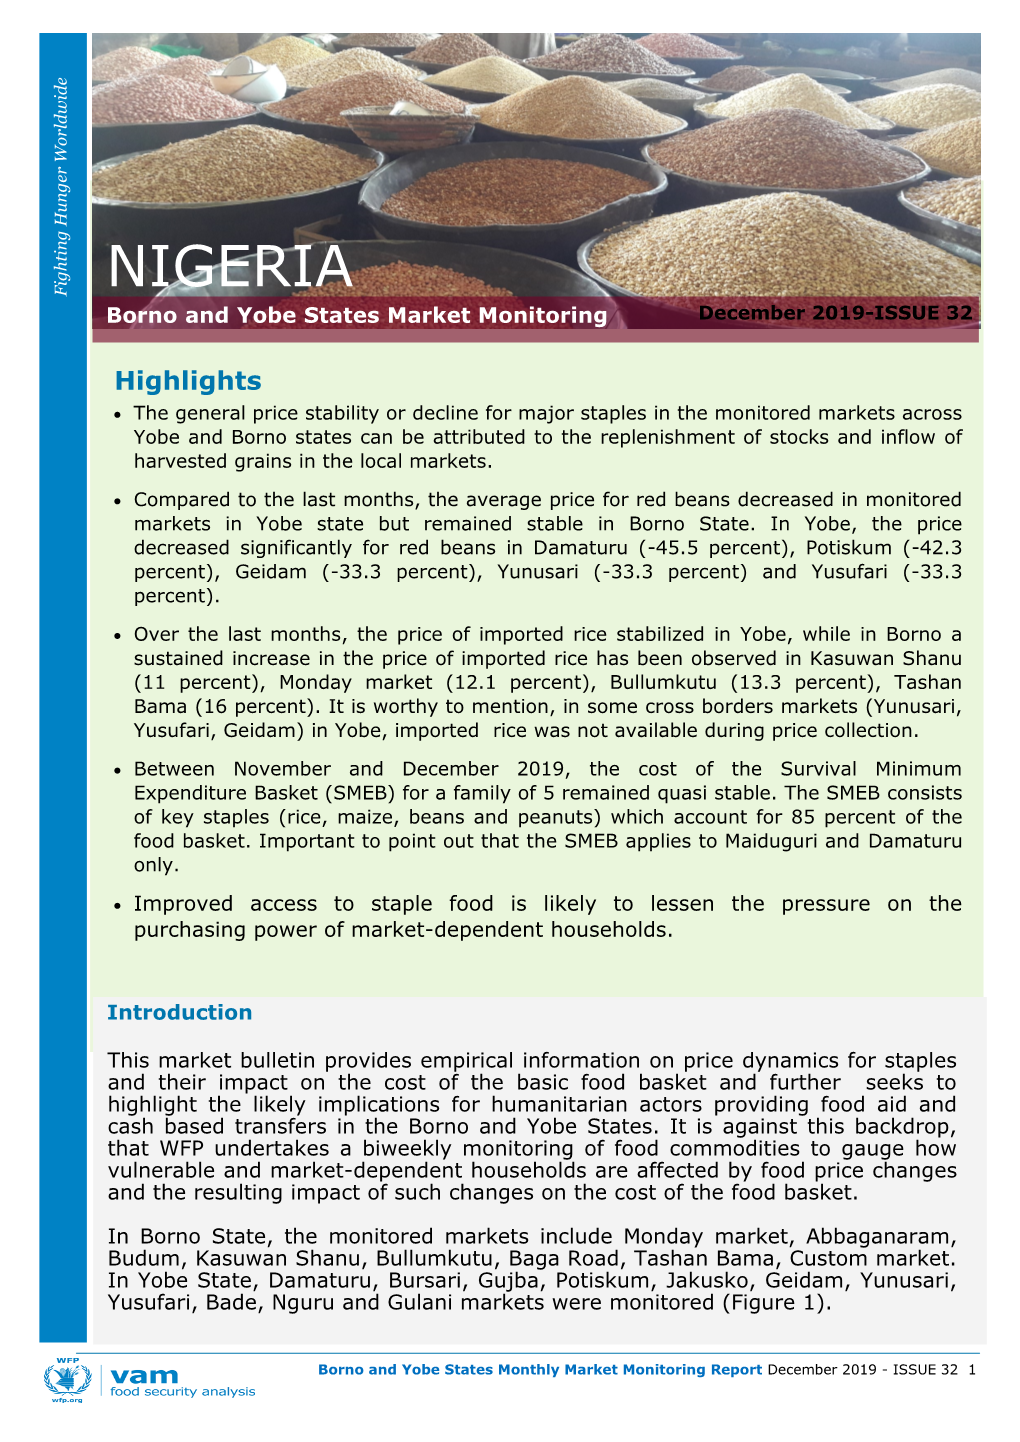 NIGERIA Borno and Yobe States Market Monitoring December 2019-ISSUE 32